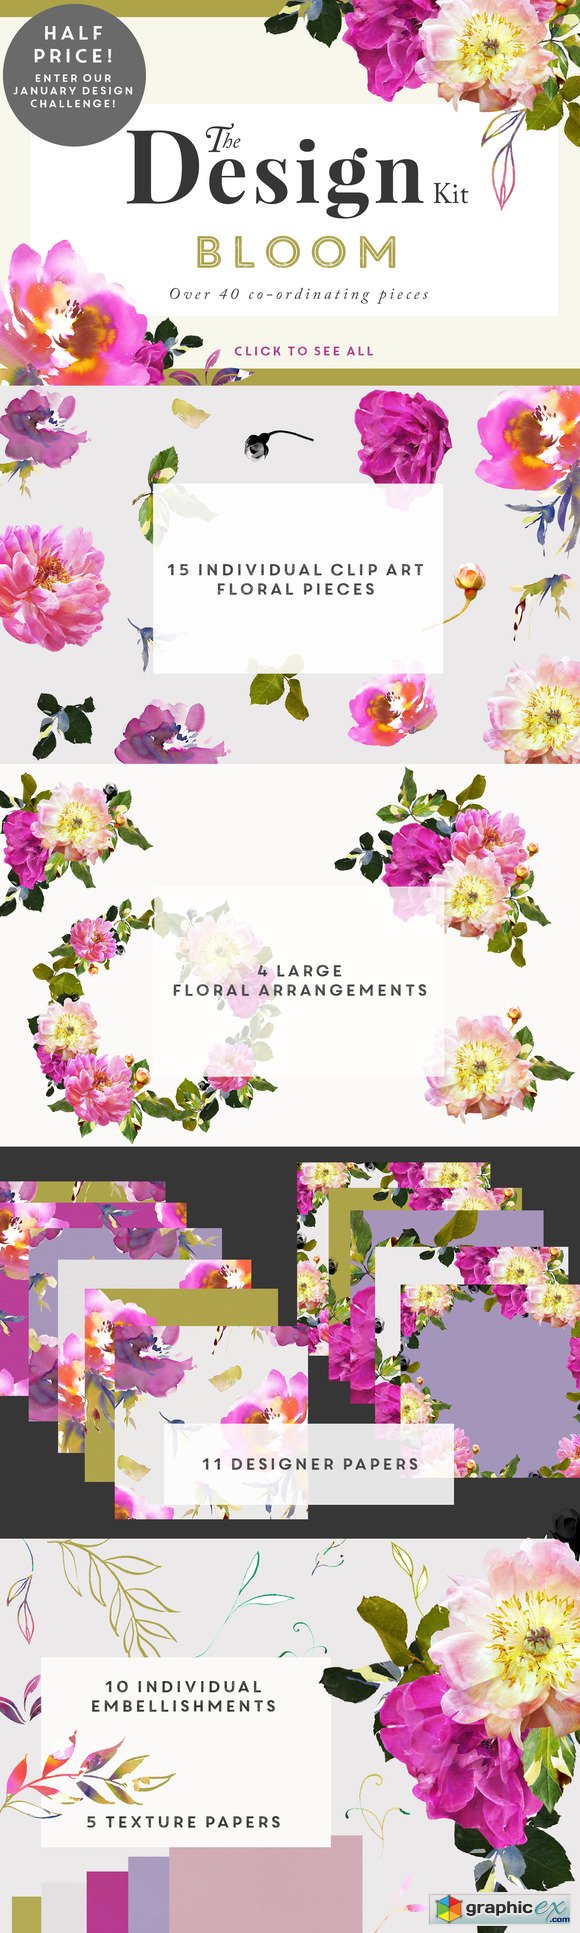 The Design Kit - Bloom